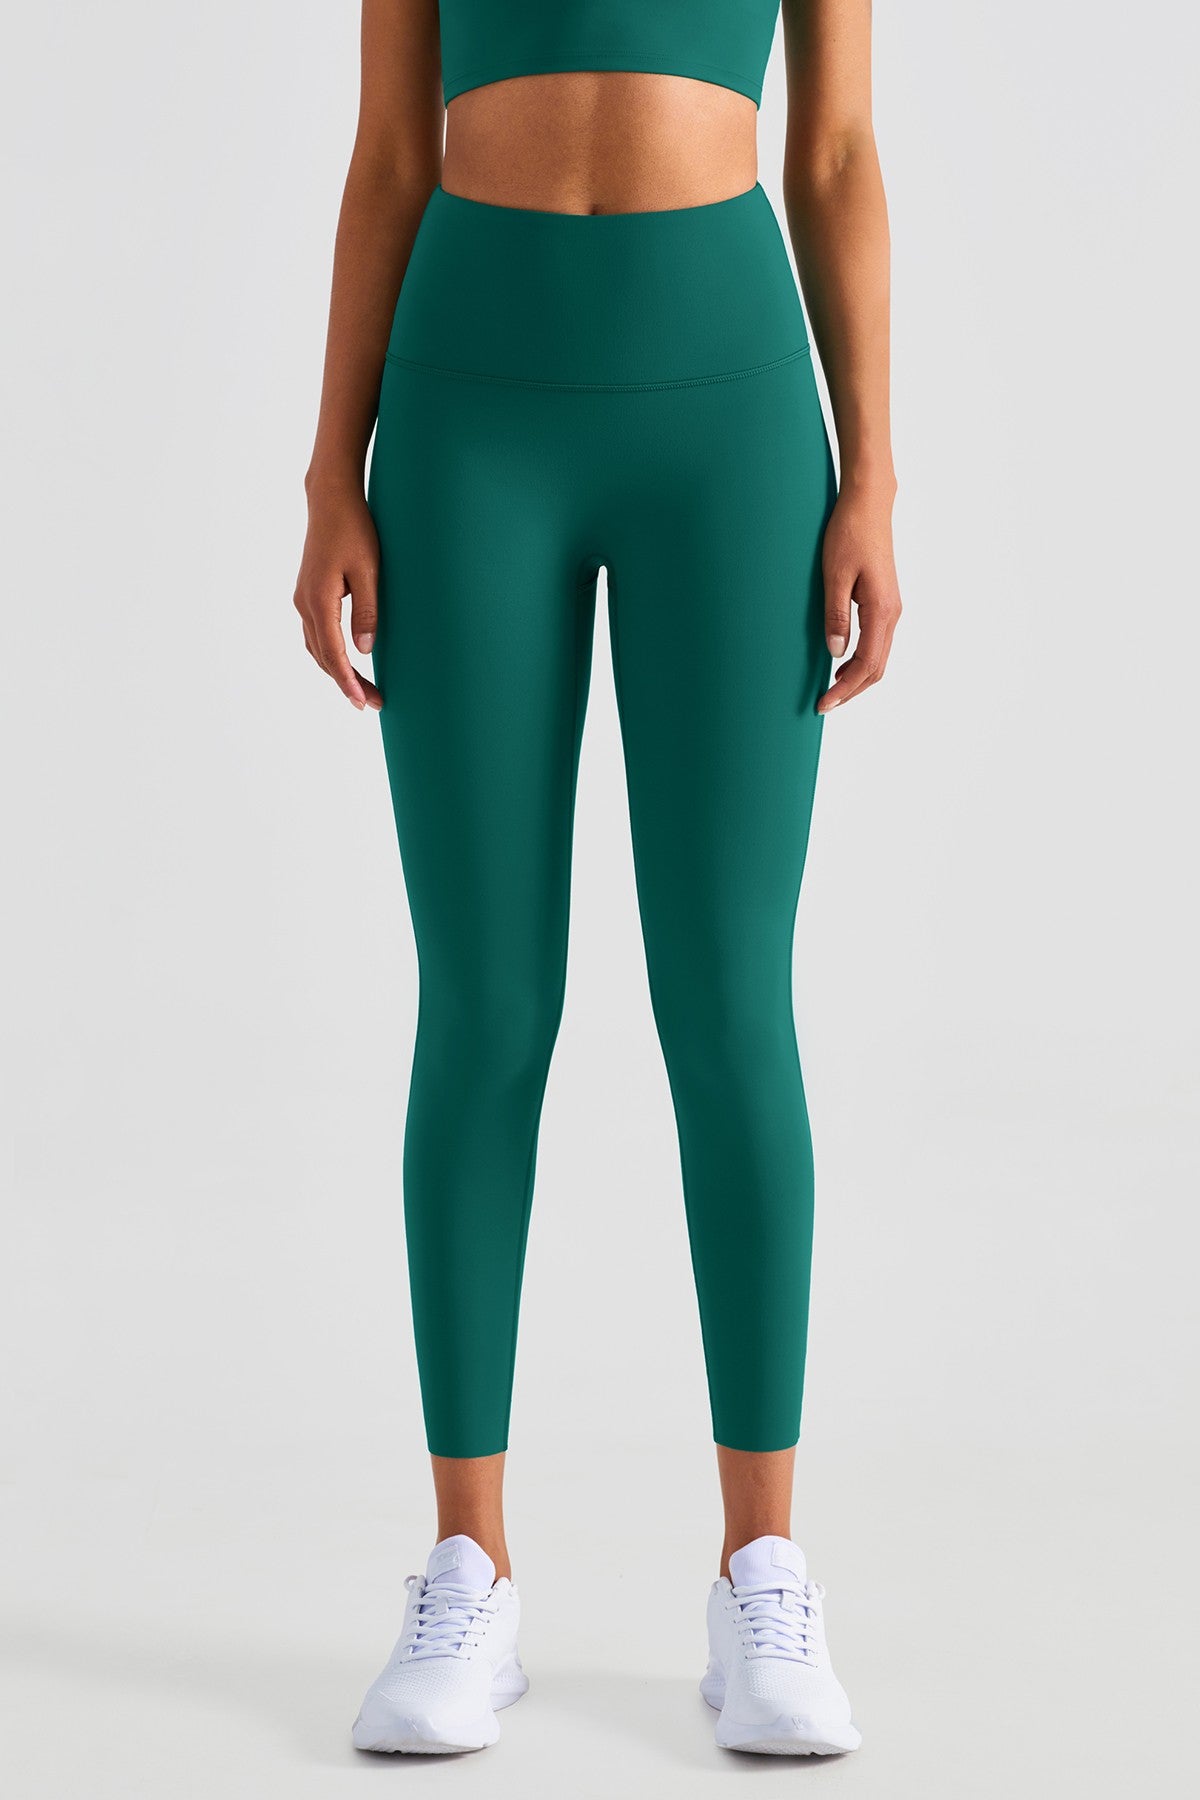 Lavento Women's Y Back Sports Bra Spaghetti Straps - Slim Padded Low Impact  Workout Yoga Bras (Blue Green, 6) at  Women's Clothing store